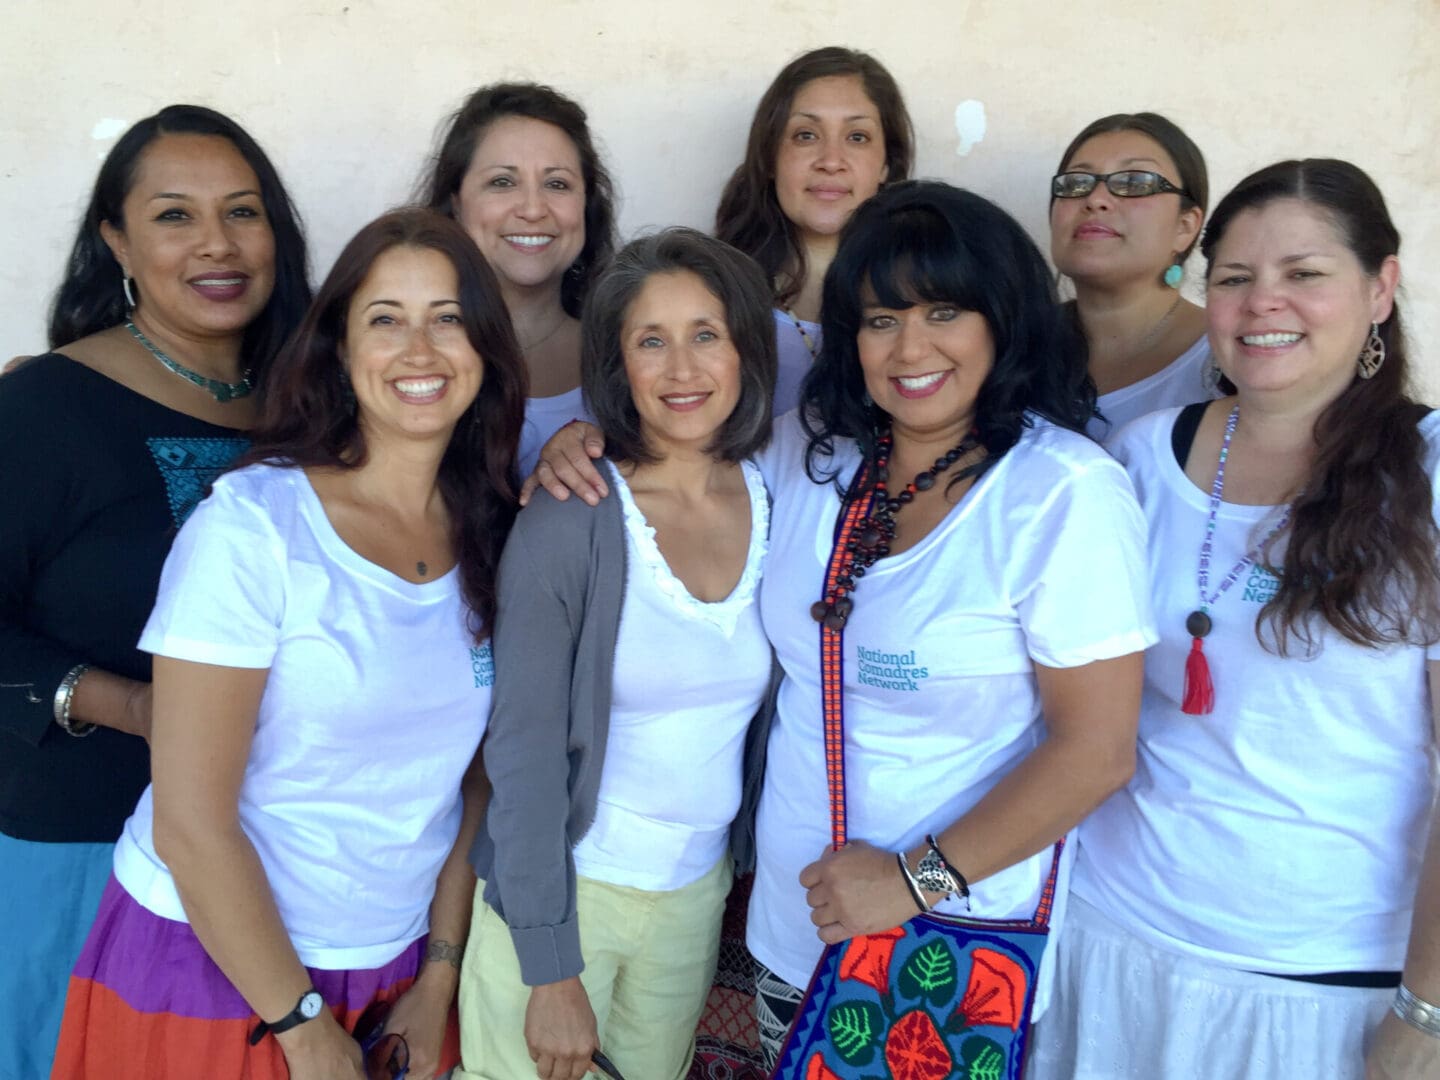 The Comadres: 2nd Annual Retreat, Mission San Antonio de Padua, Jolon, California, August 9, 2015
